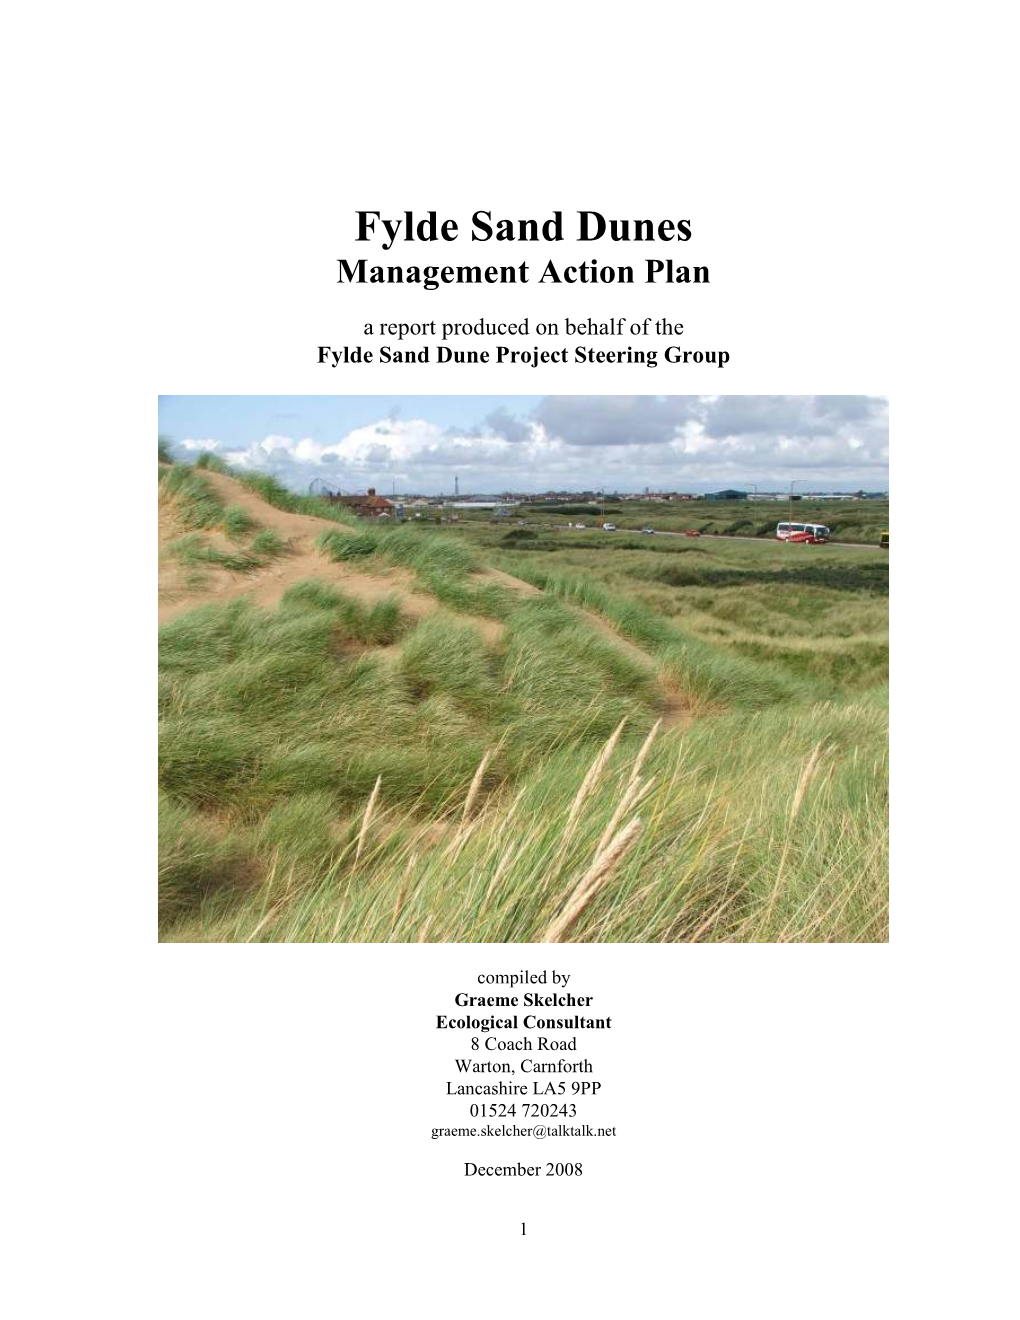 Fylde Sand Dunes Management Action Plan